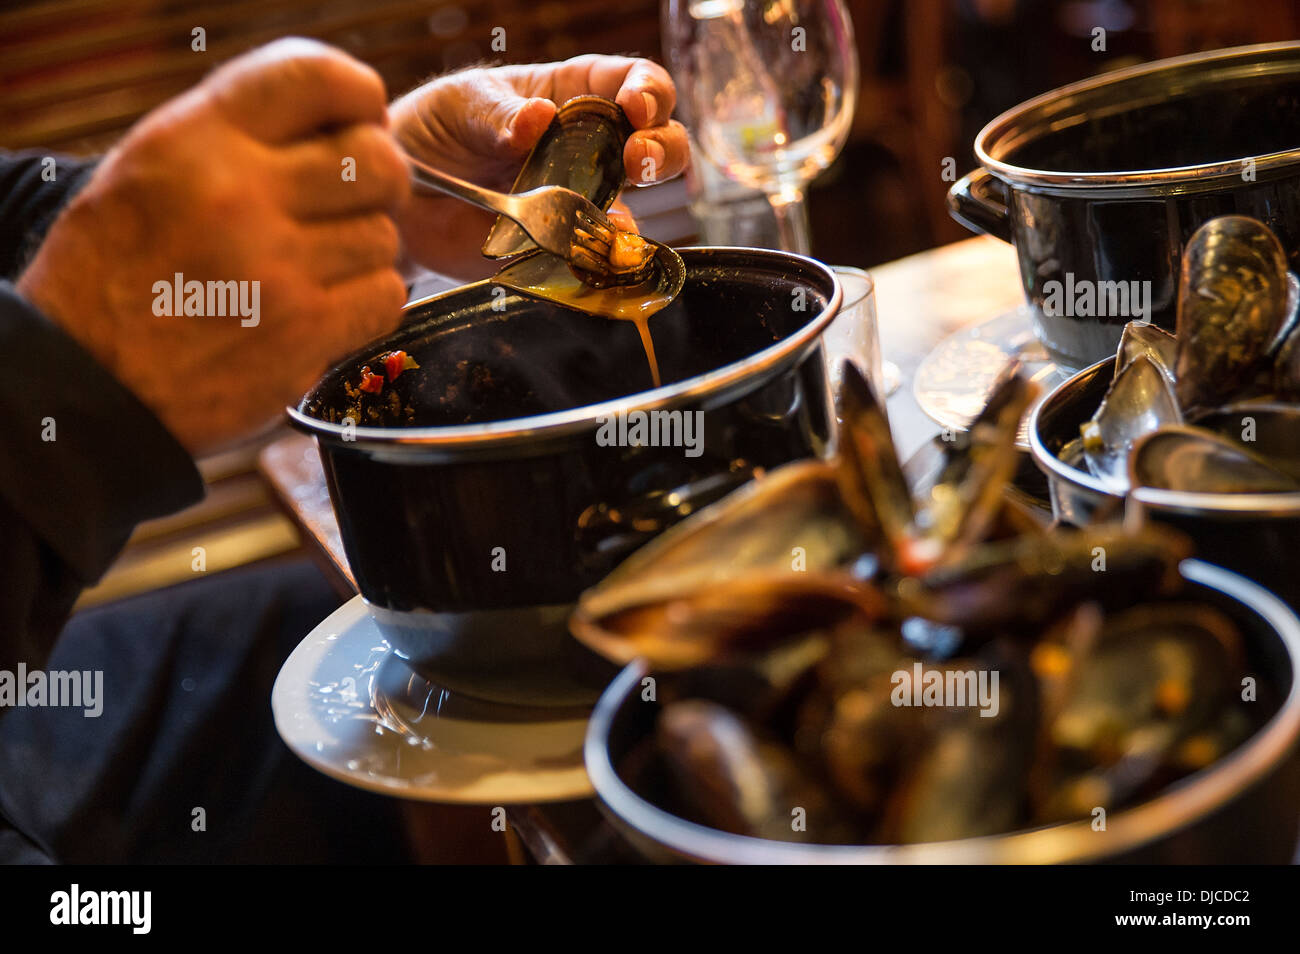 Patron enjoys a mussel dish at a tapas restaurant, Barcelona, Spain Stock Photo